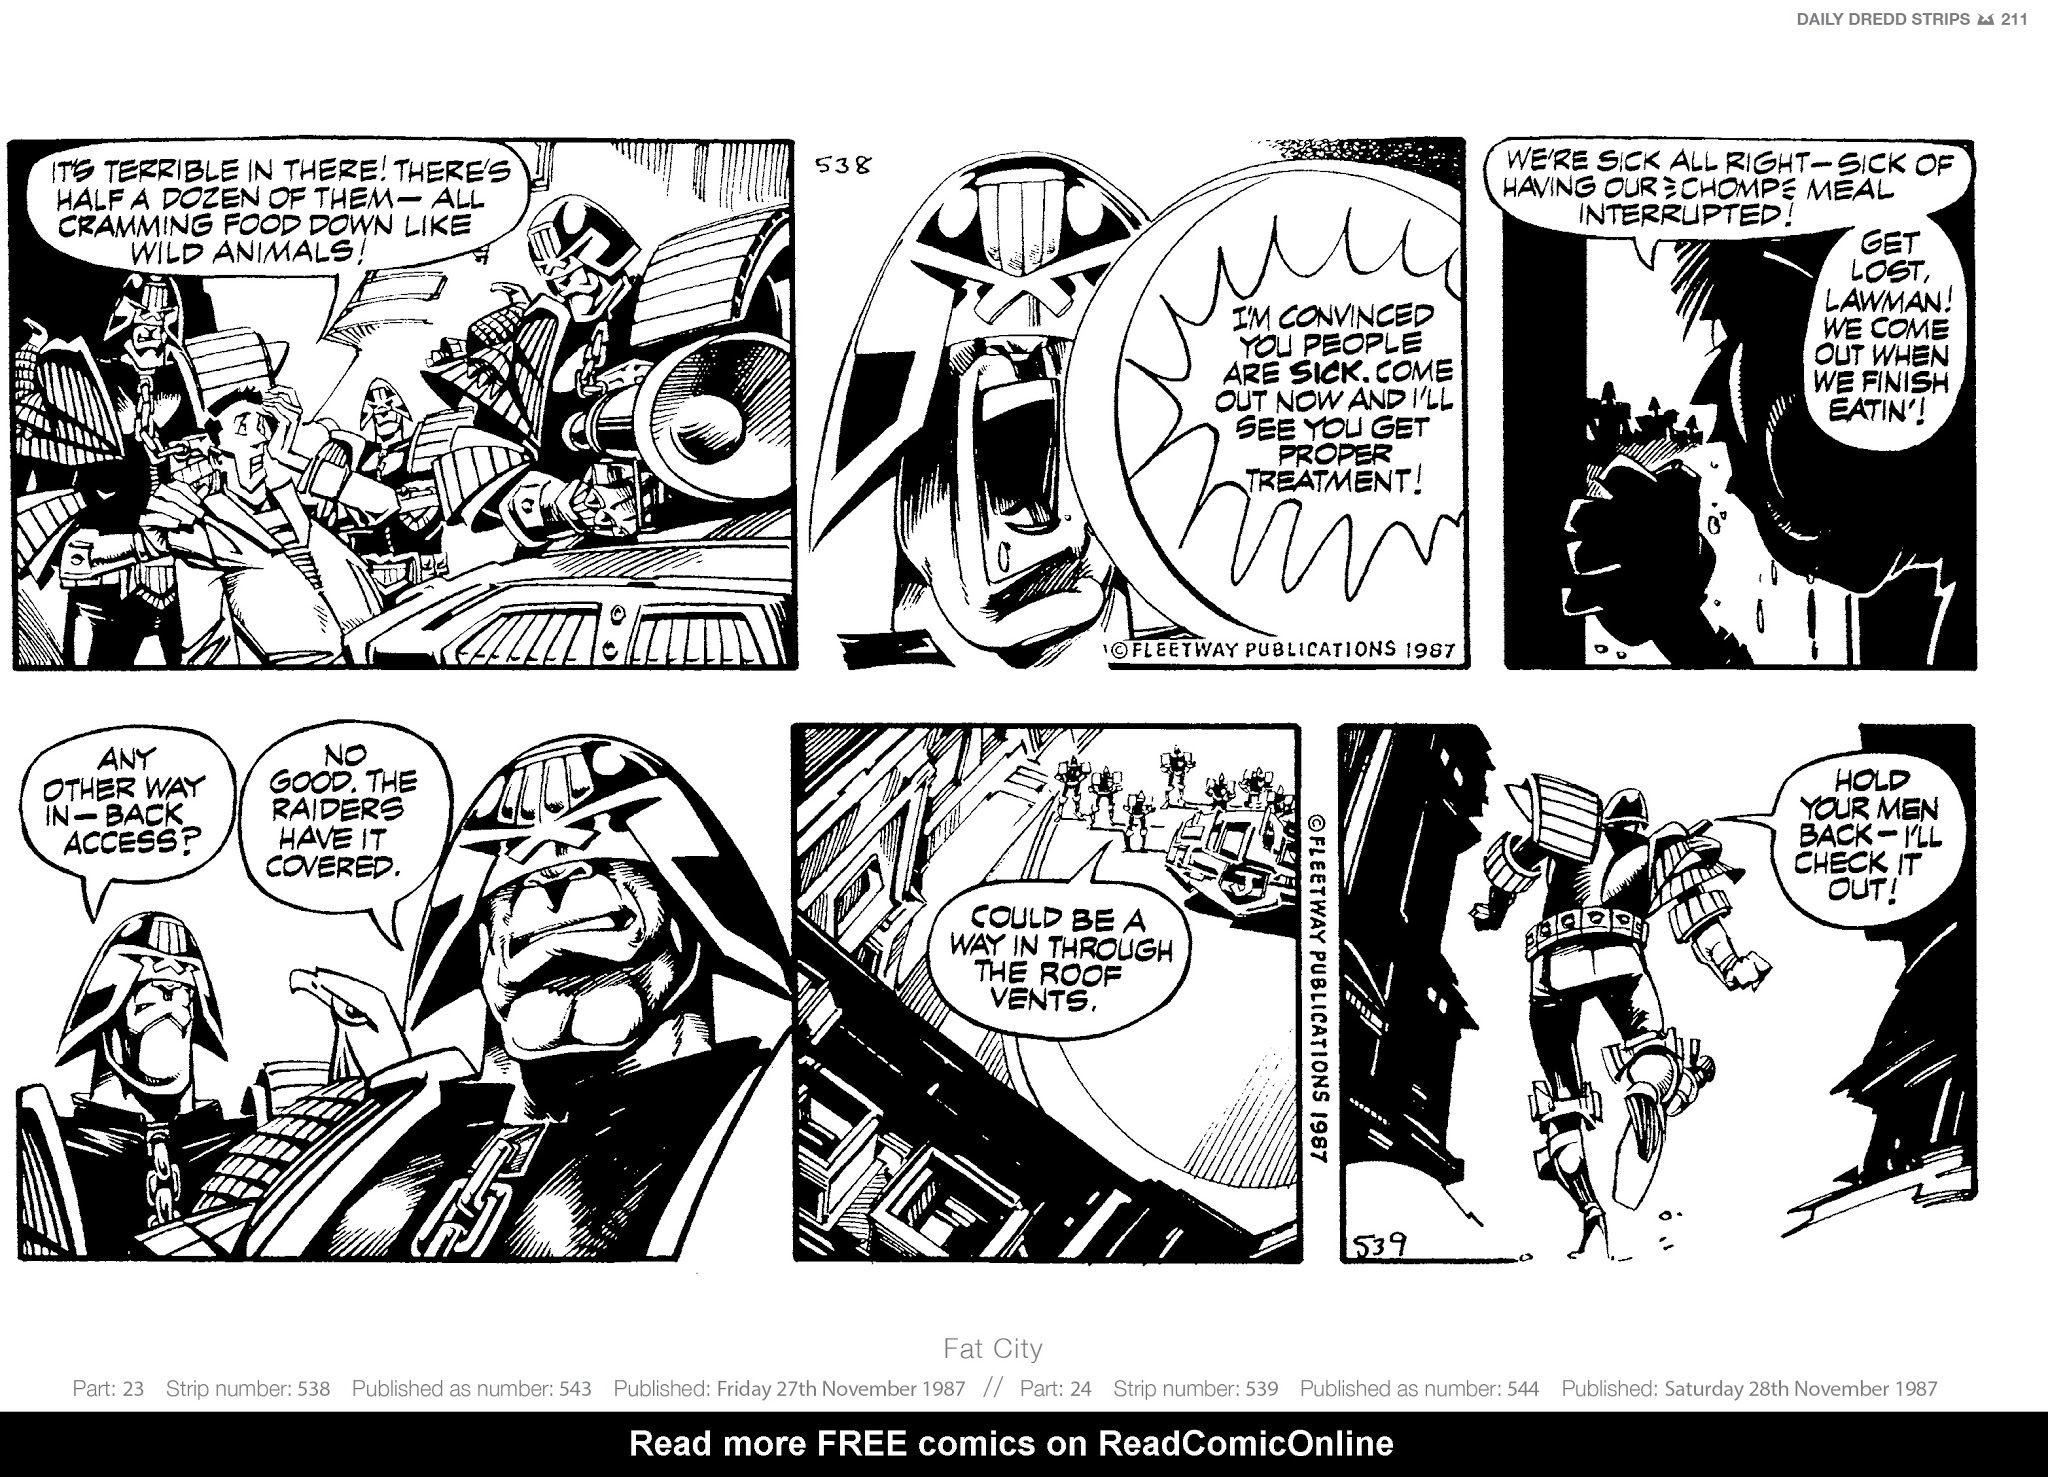 Read online Judge Dredd: The Daily Dredds comic -  Issue # TPB 2 - 214